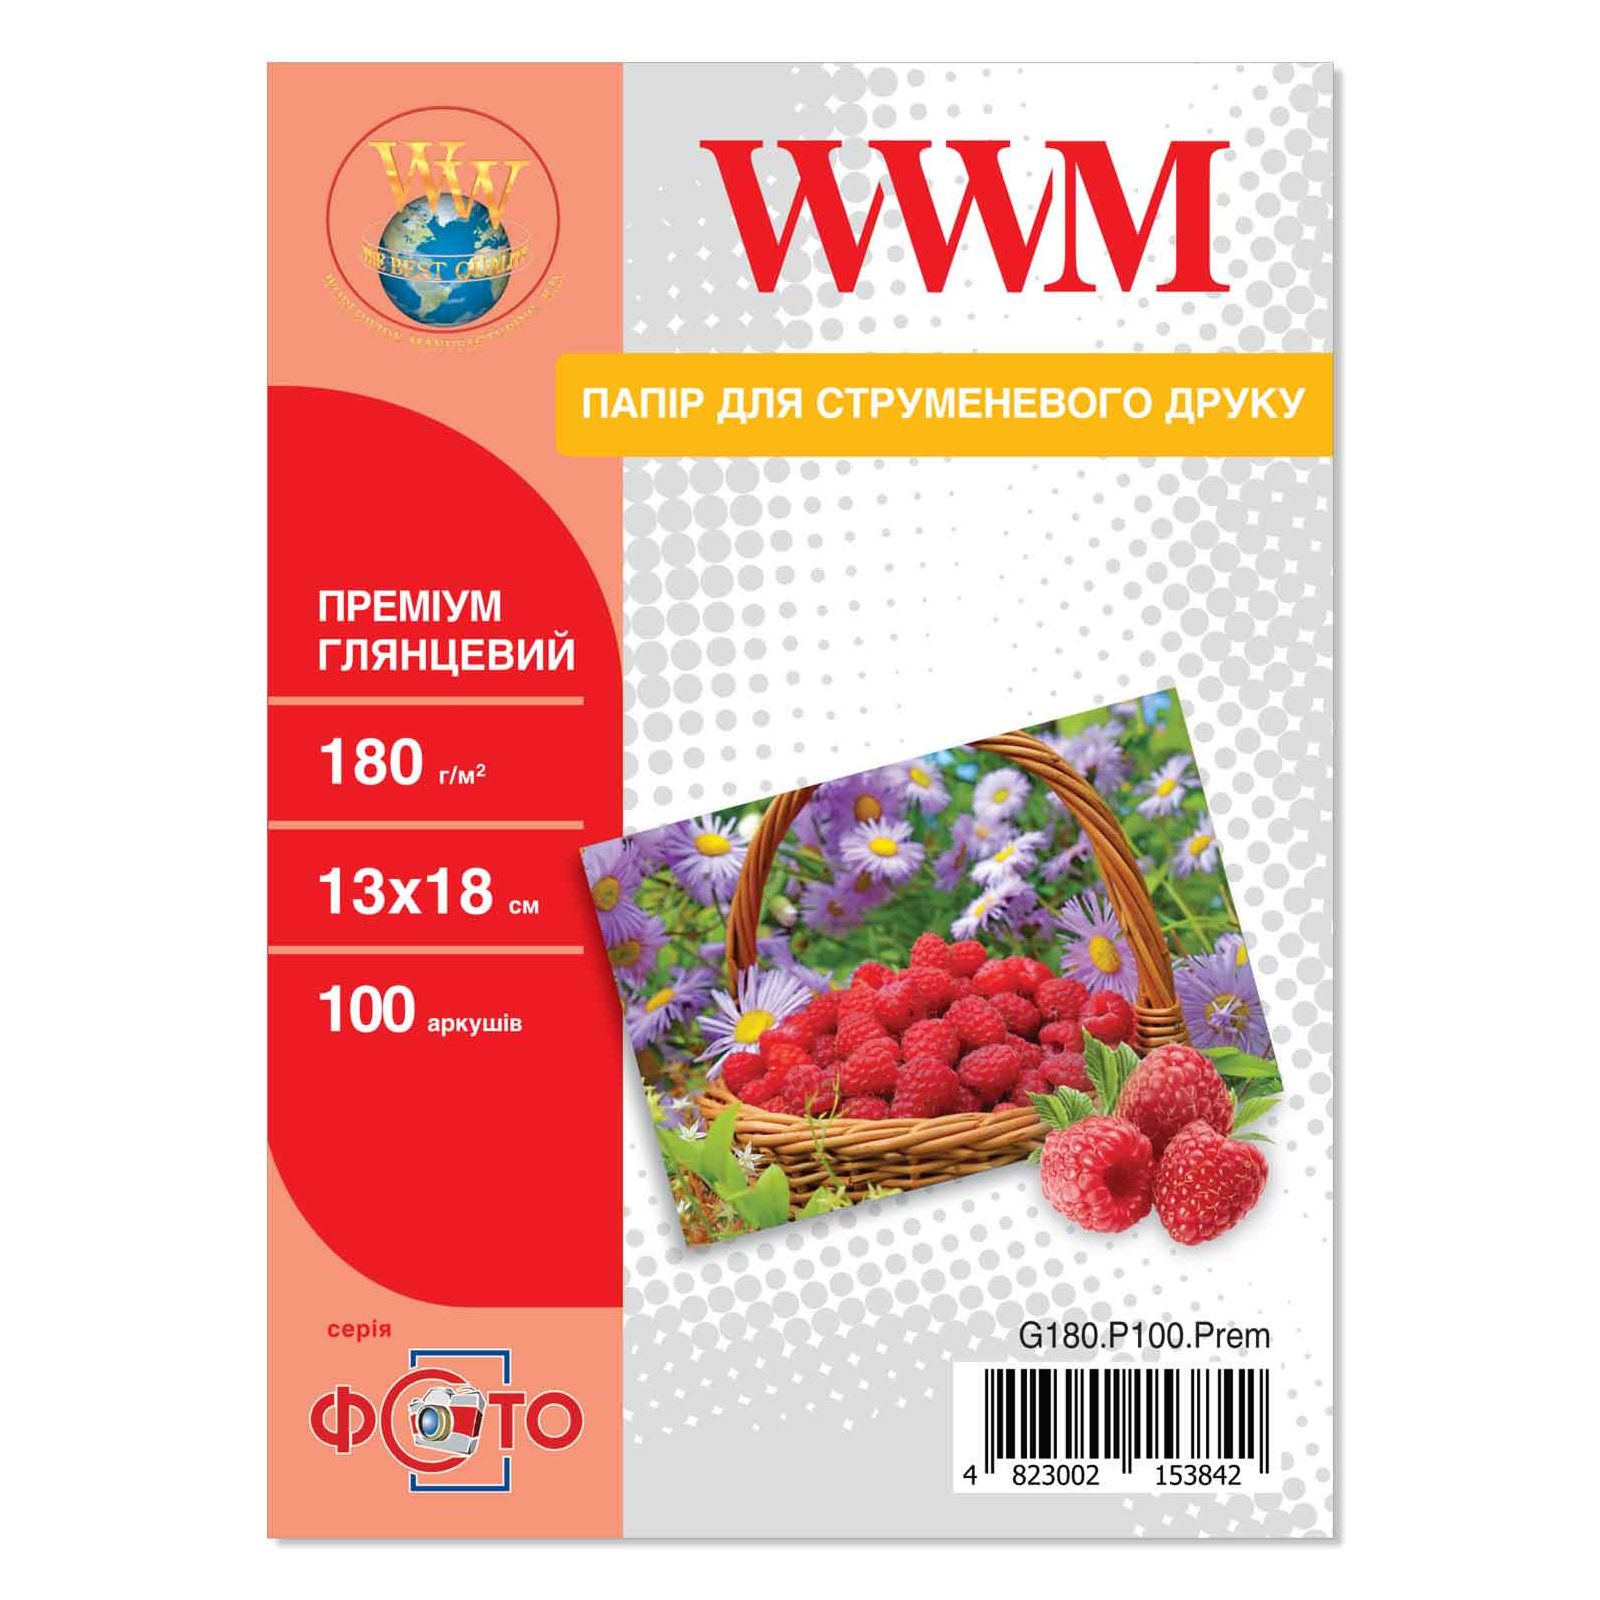 Фотобумага 13x18 Premium WWM (G180.P100.Prem)